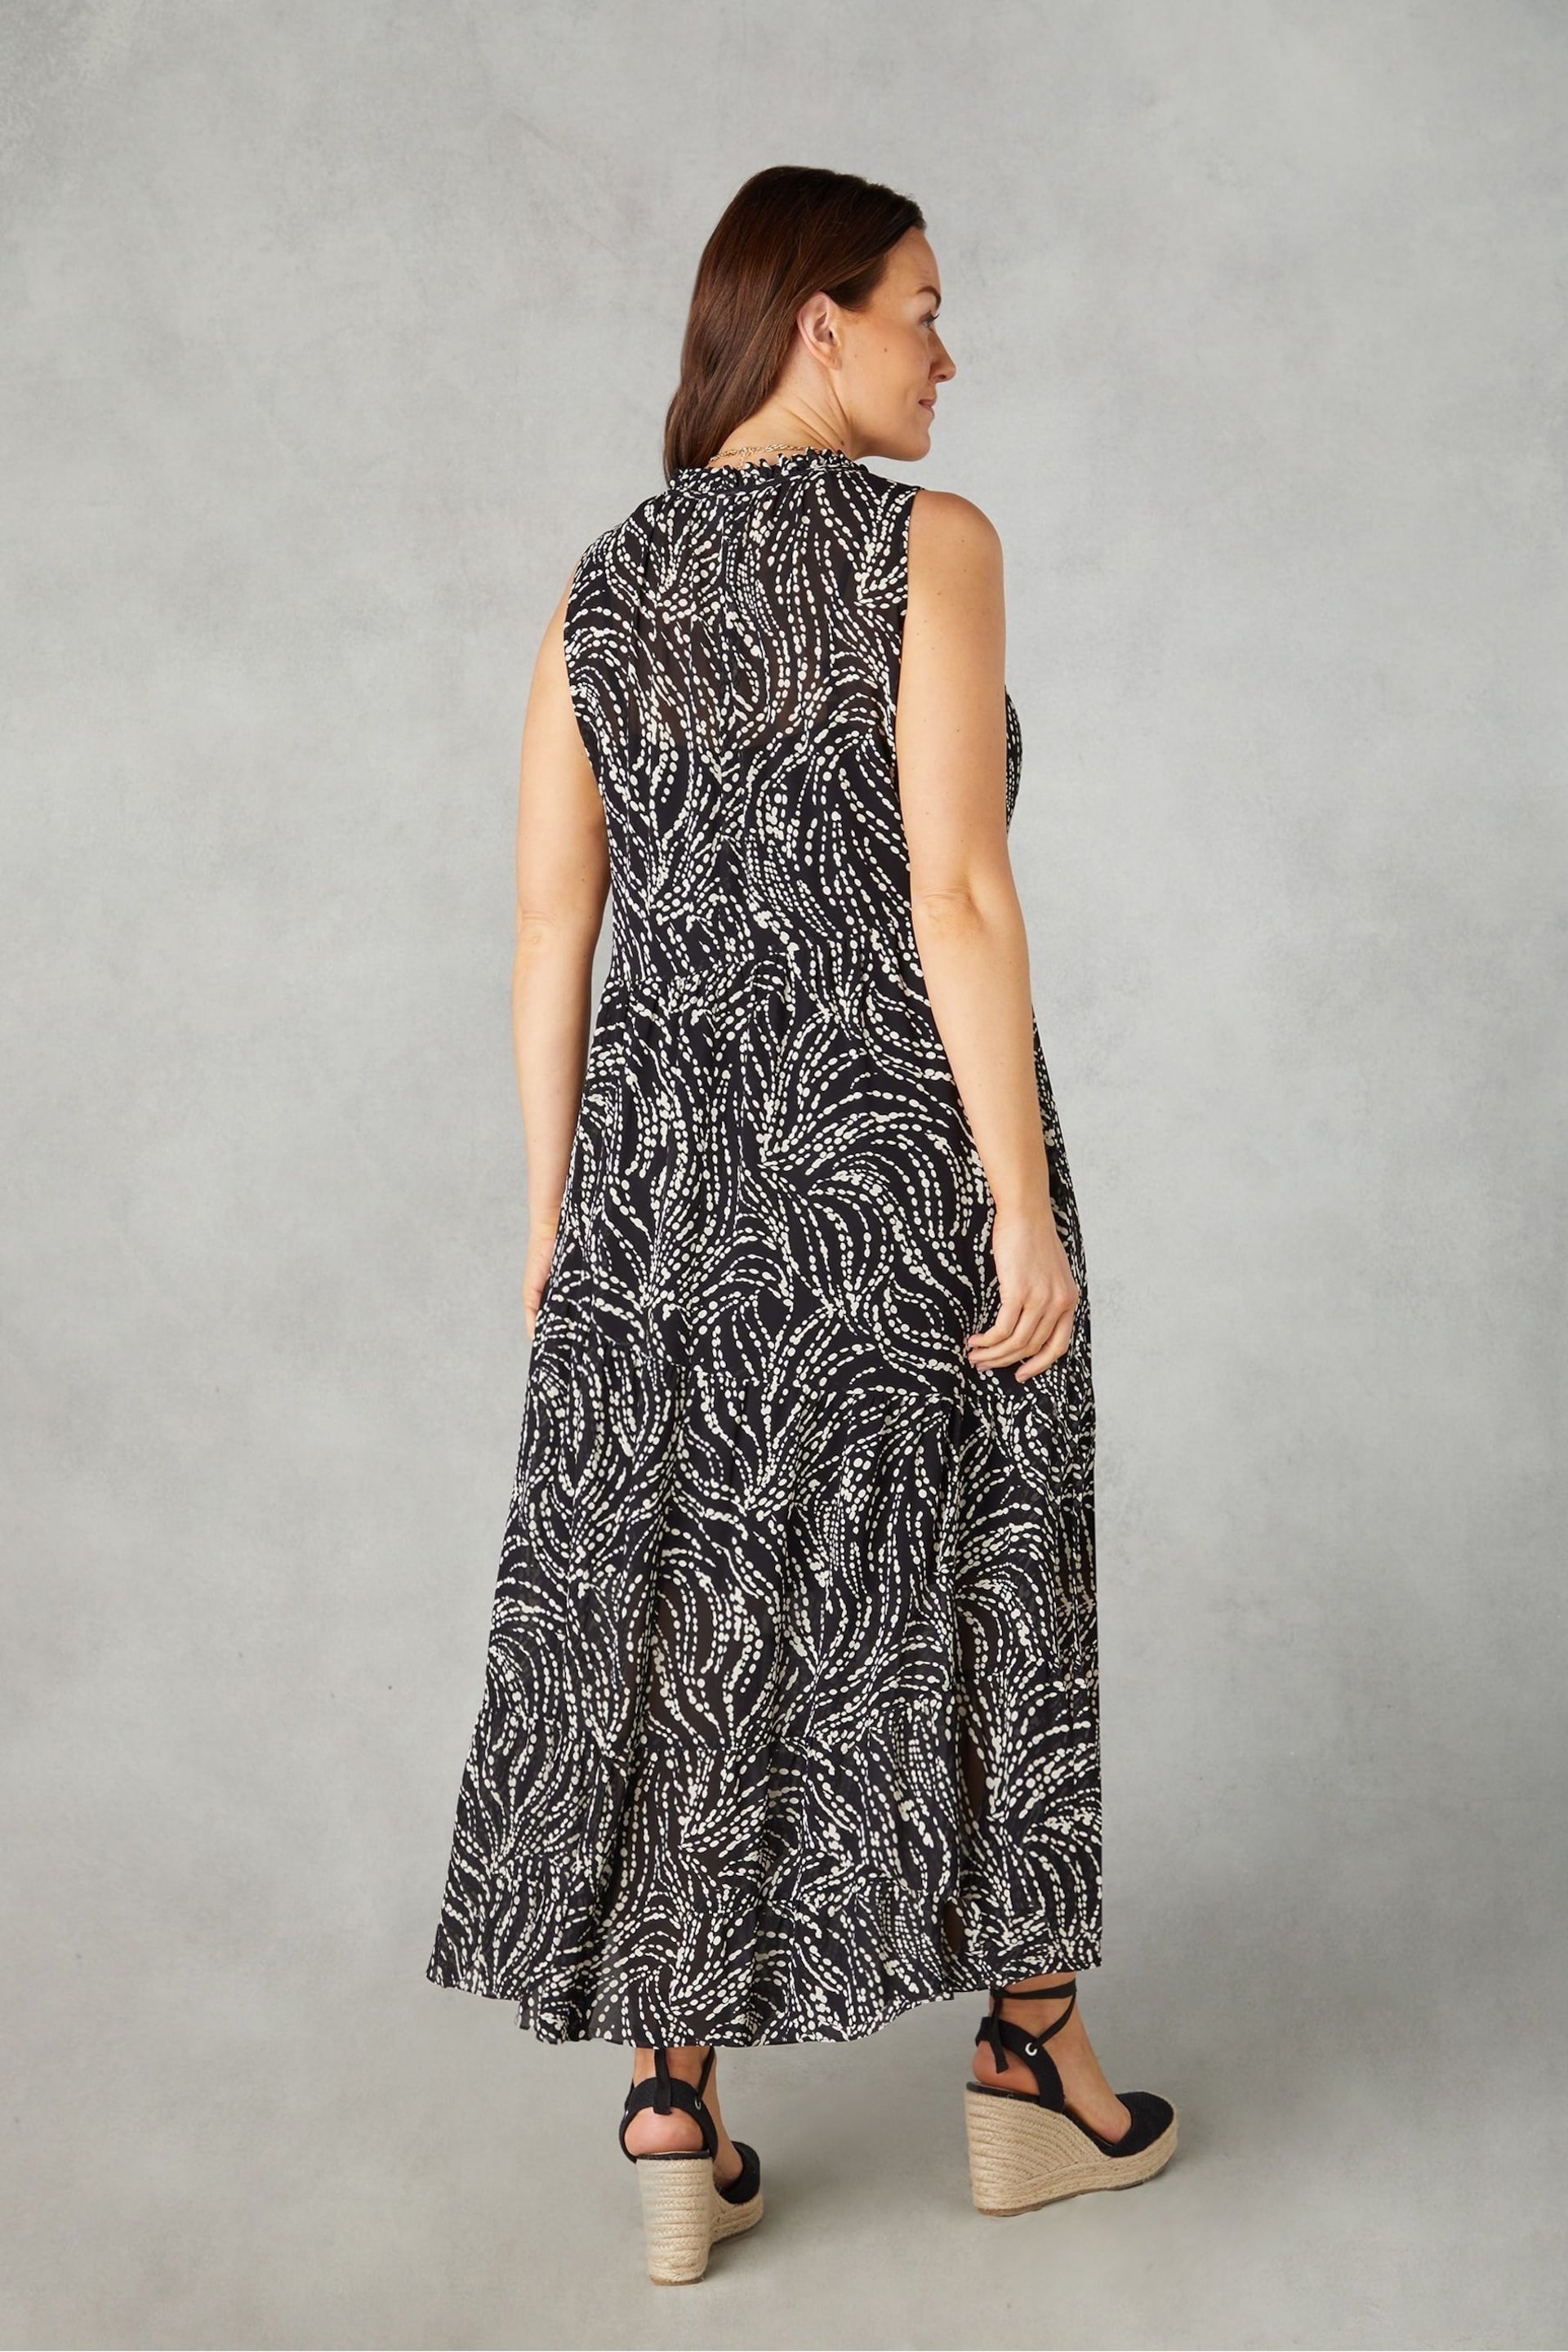 Live Unlimited Curve - Petite Spot Print Ruffle Black Midaxi Dress - Image 2 of 5